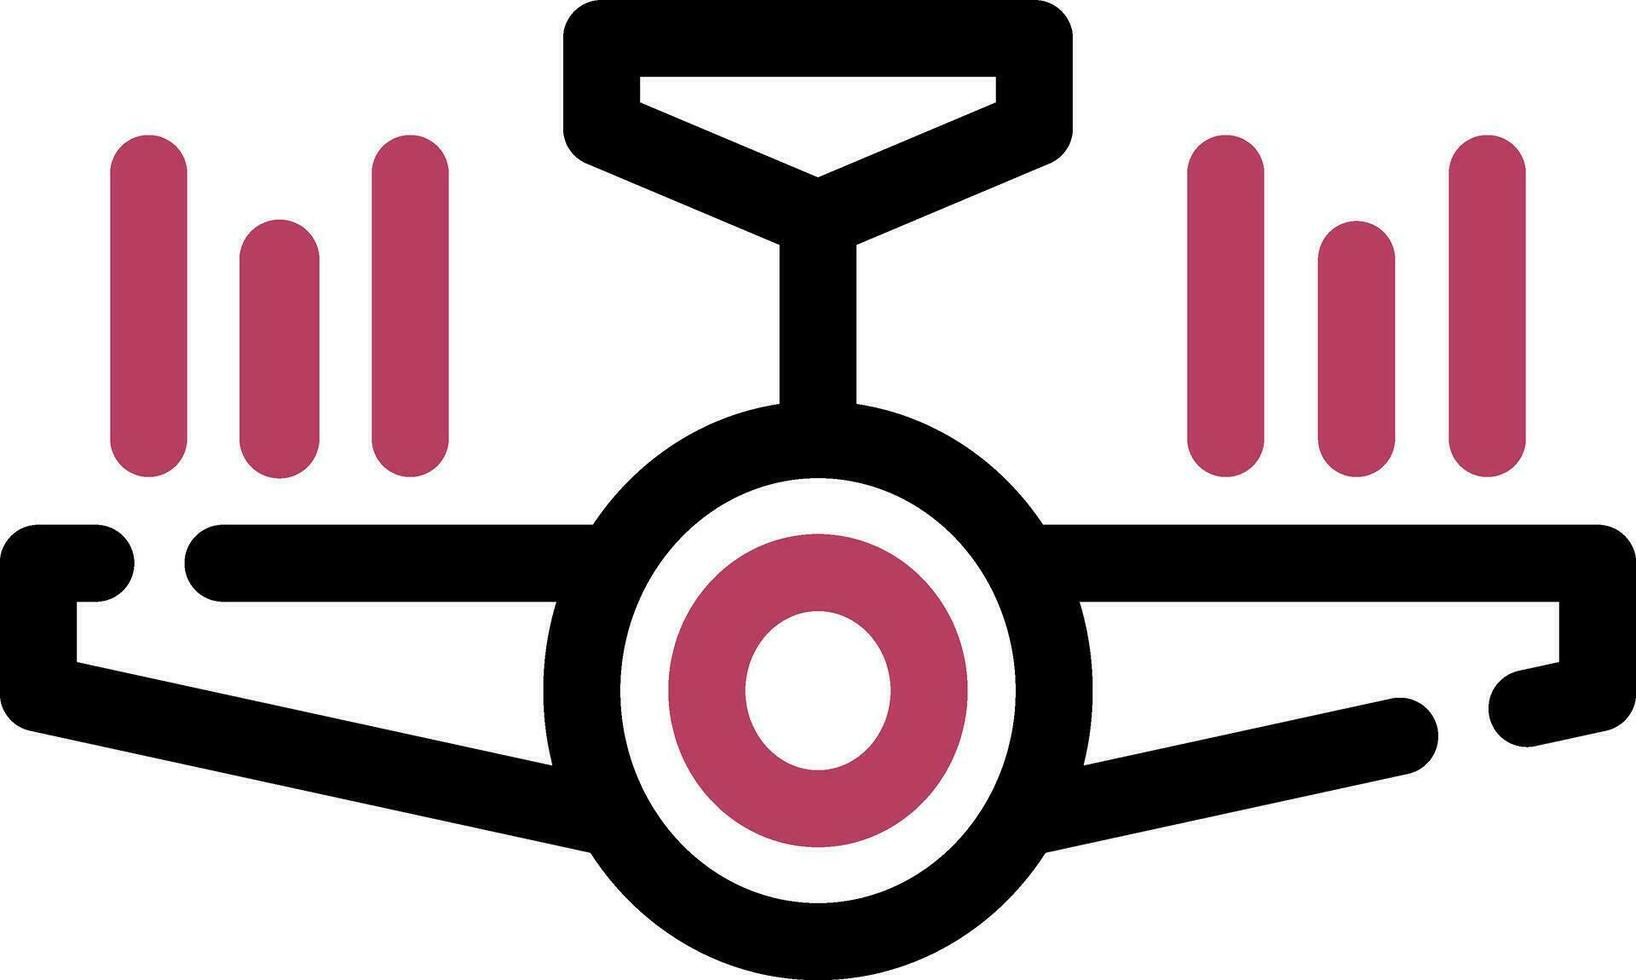 Airplane Creative Icon Design vector